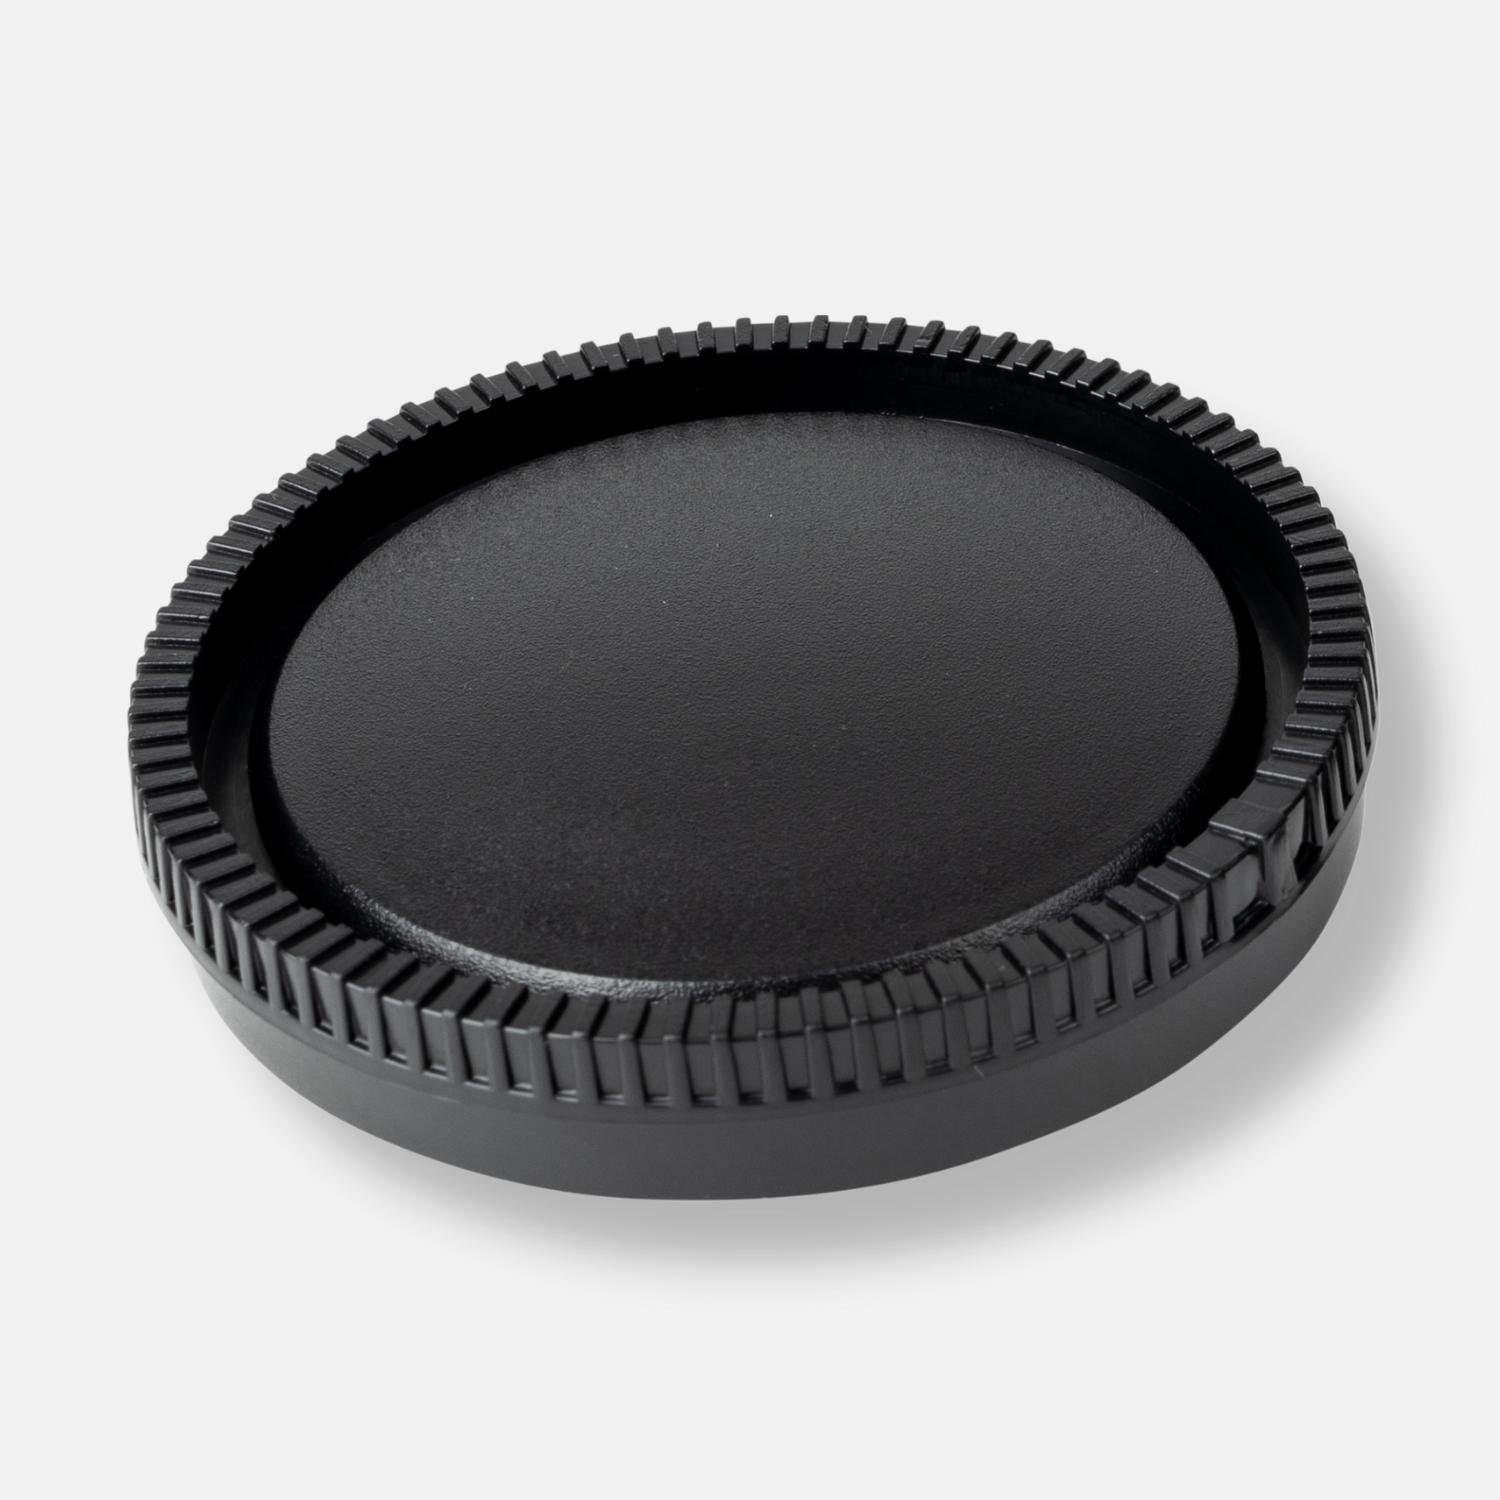 Lens-Aid Gehäusedeckel für Sony E-Bajonett, Body Cap, DSLR, Systemkamera